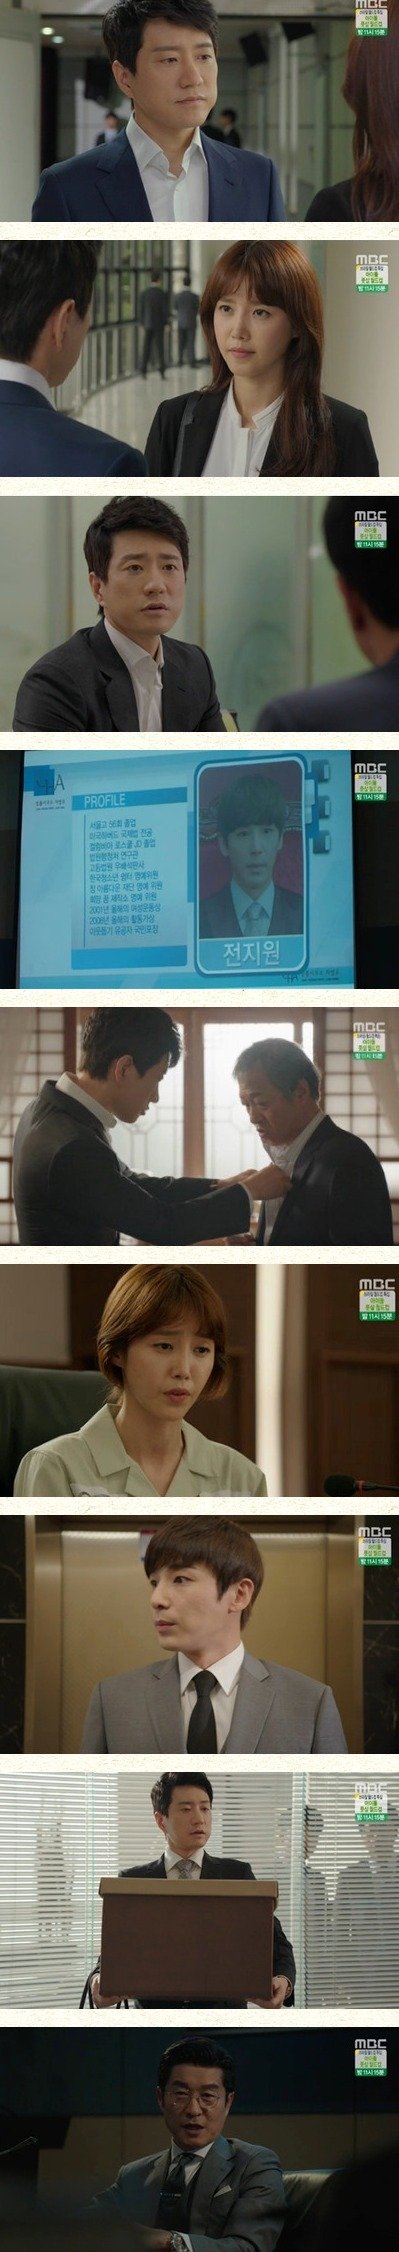 episode 12 captures for the Korean drama 'A New Leaf'